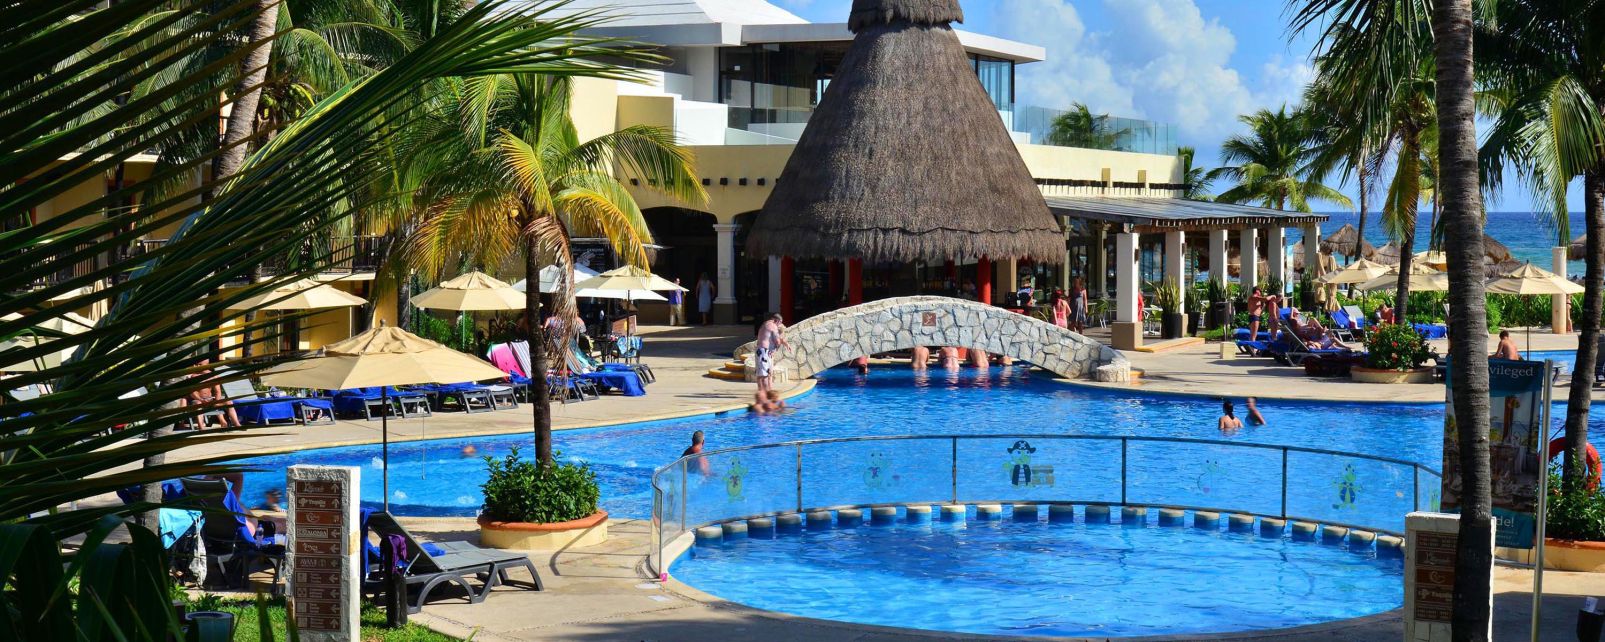 Hotel Catalonia Riviera Maya & Yucatan Beach, Puerto Aventuras, México